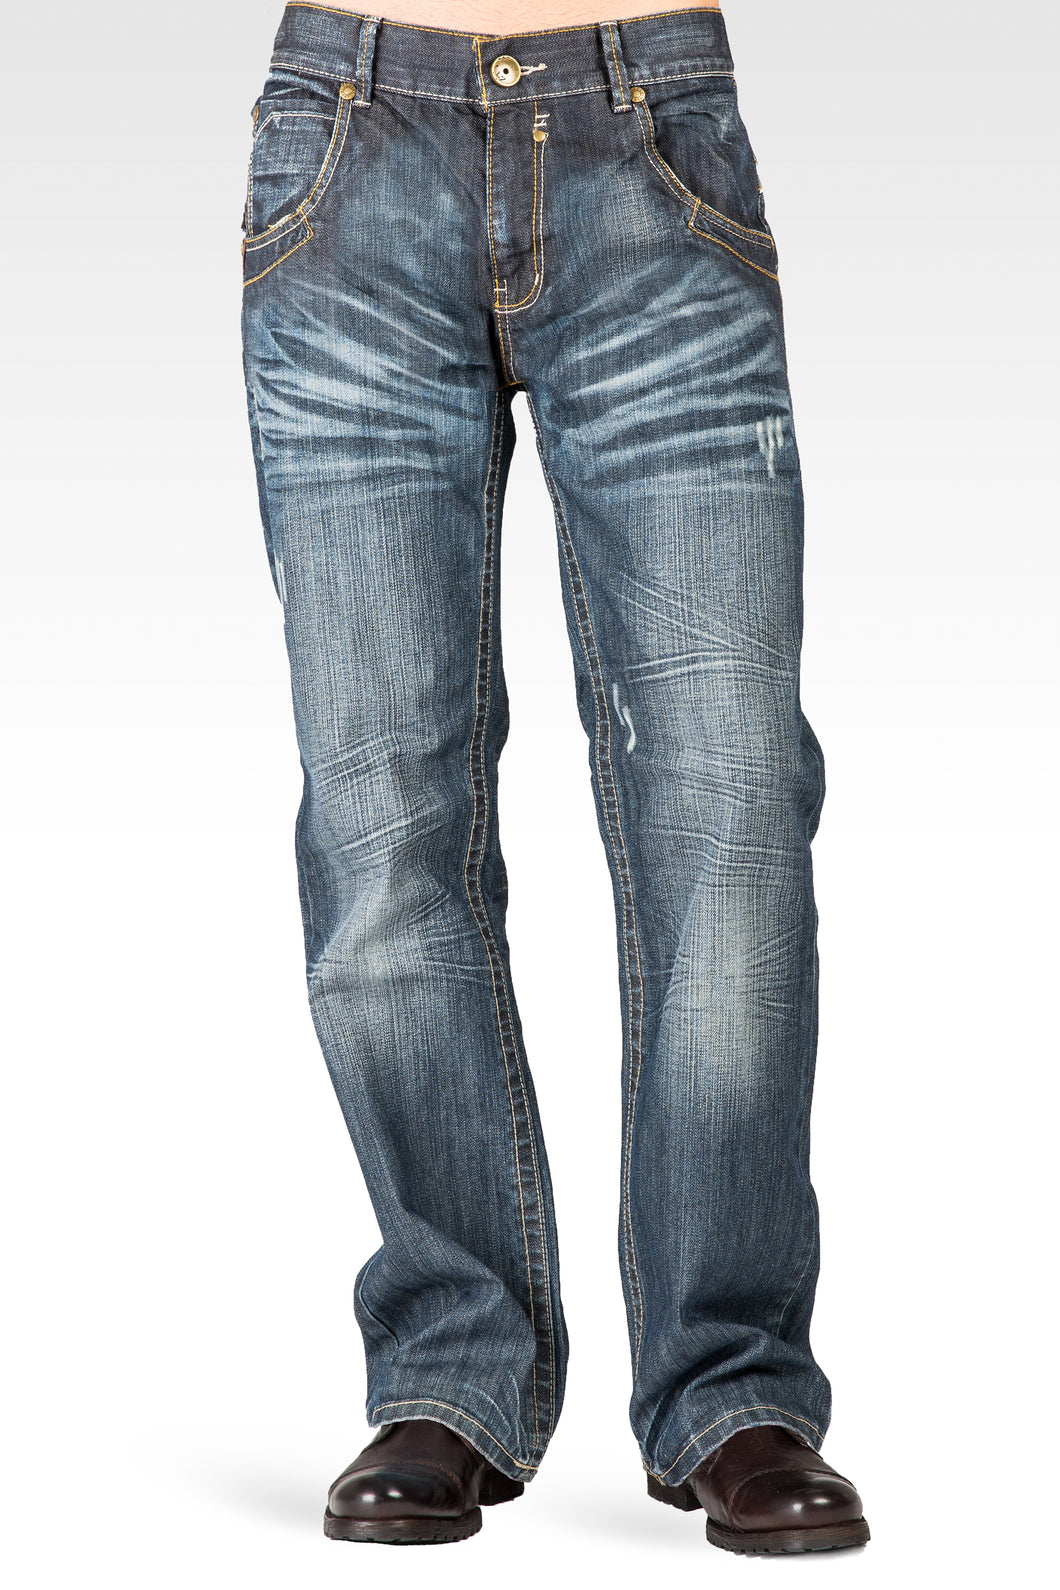 7 jeans mens